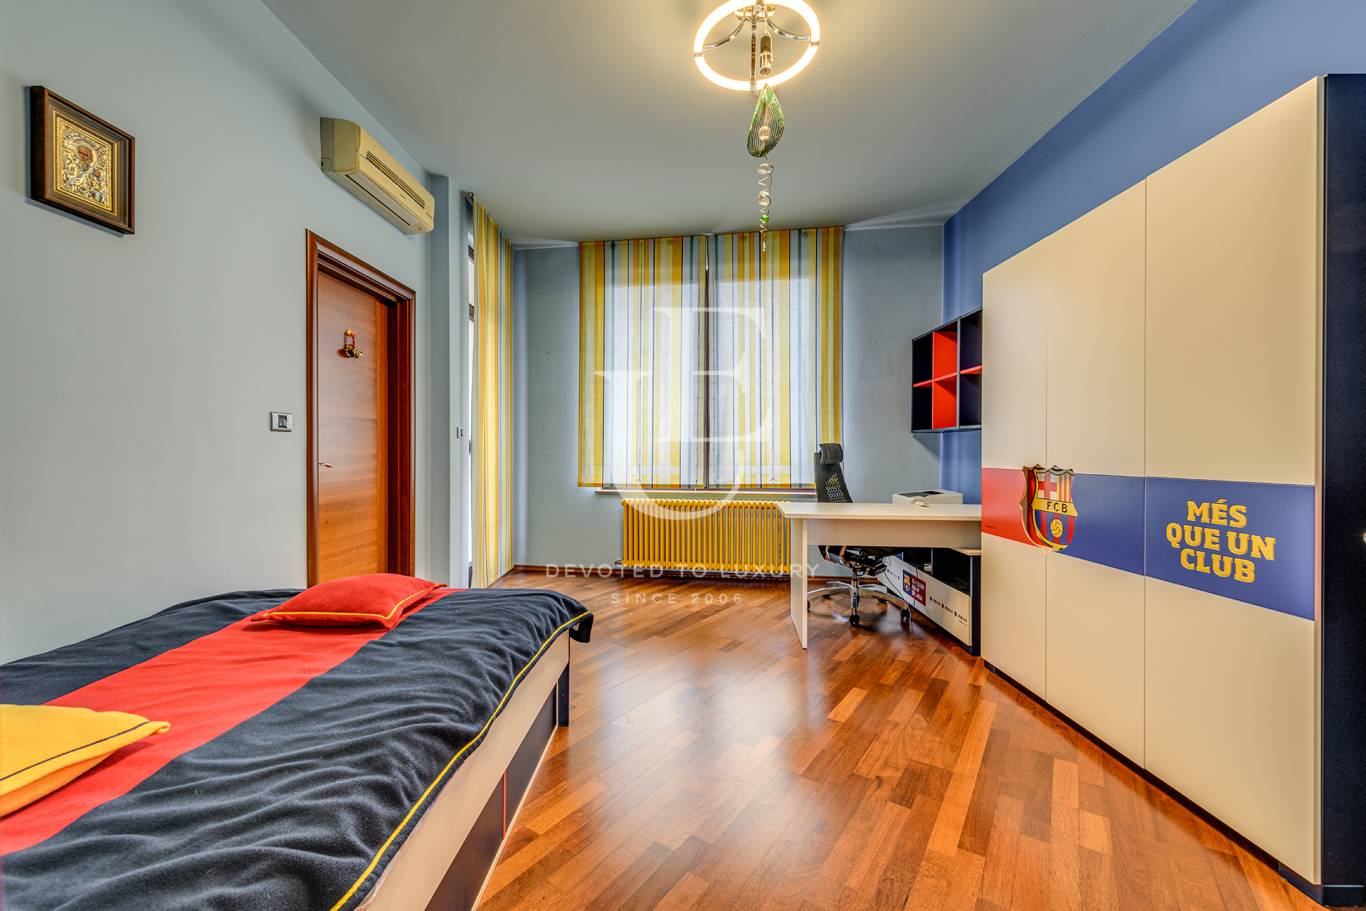 Апартамент под наем в София, Лозенец - код на имота: K19035 - image 3